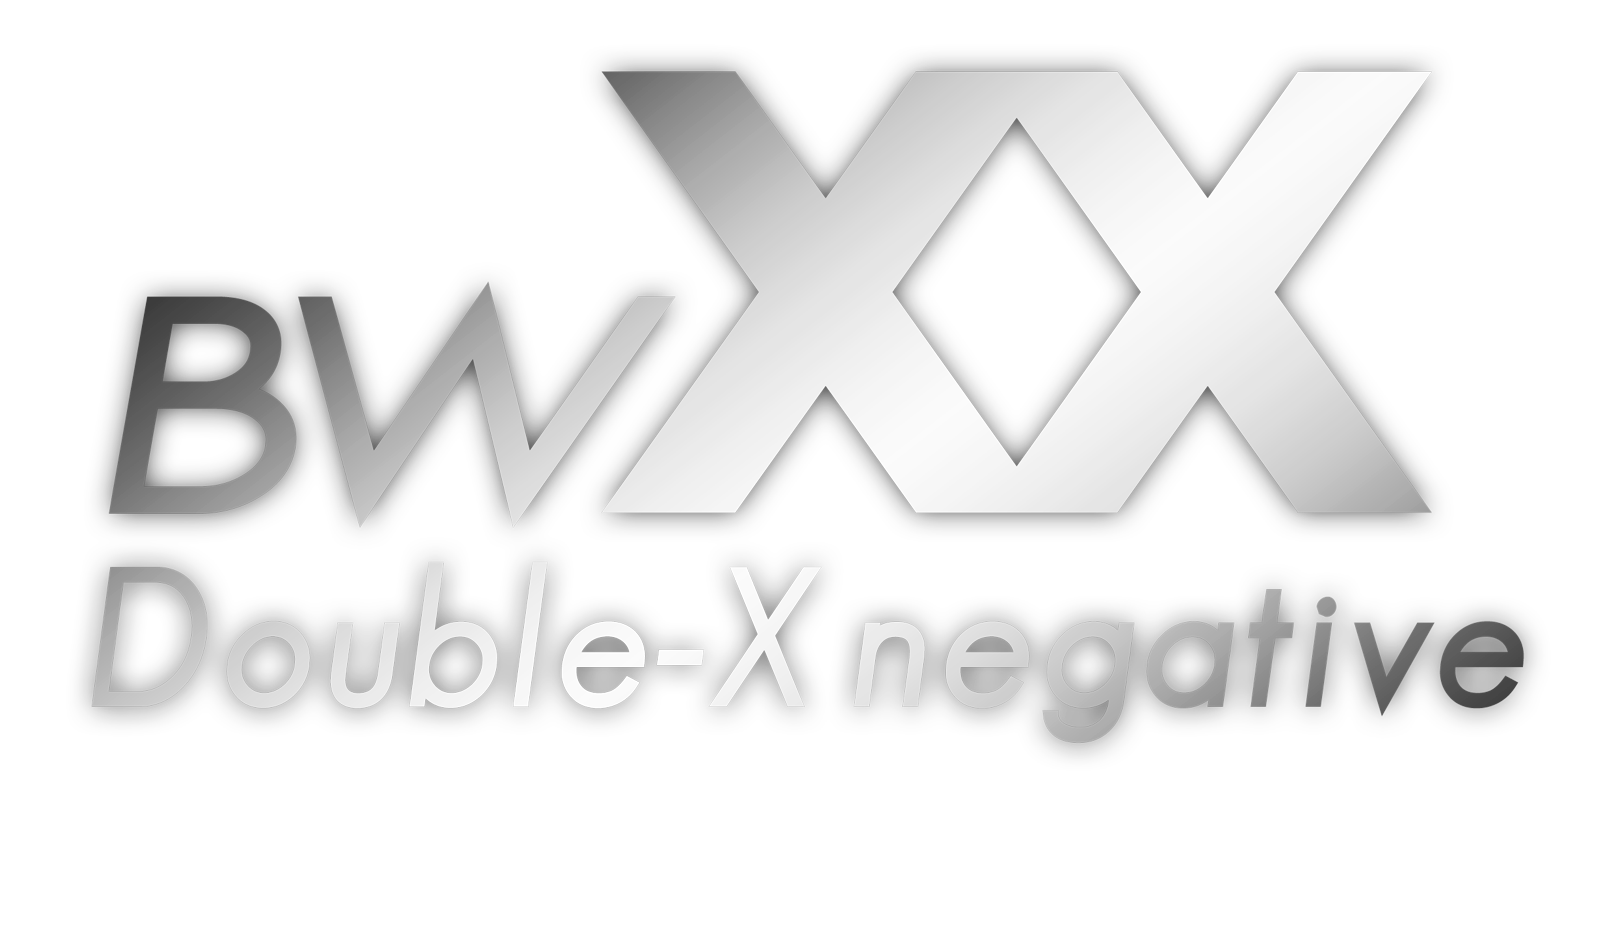 BWxx Double-X Negative